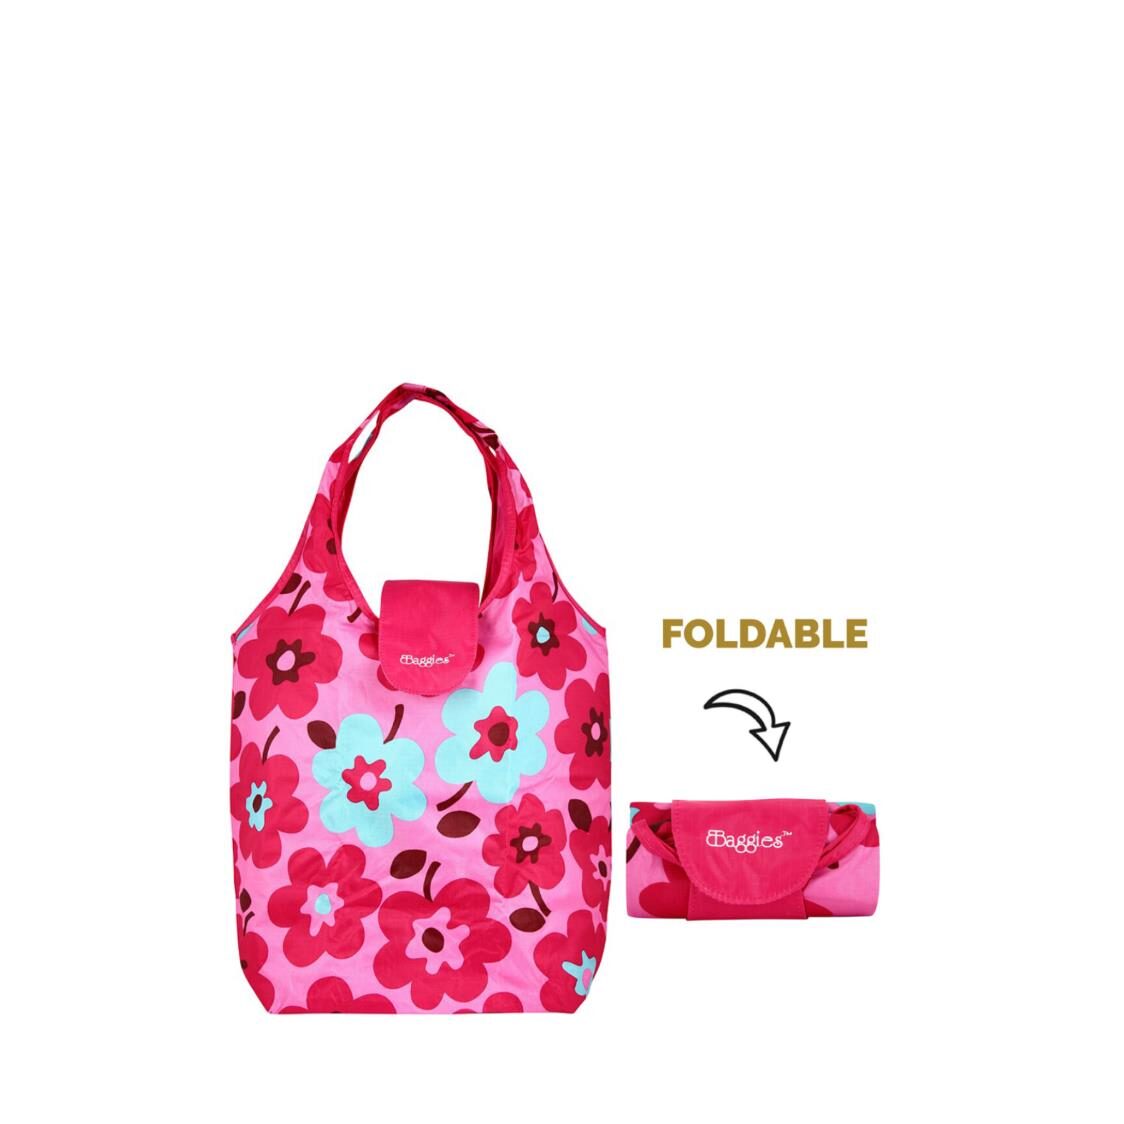 BBaggies Foldable Shopping Bag